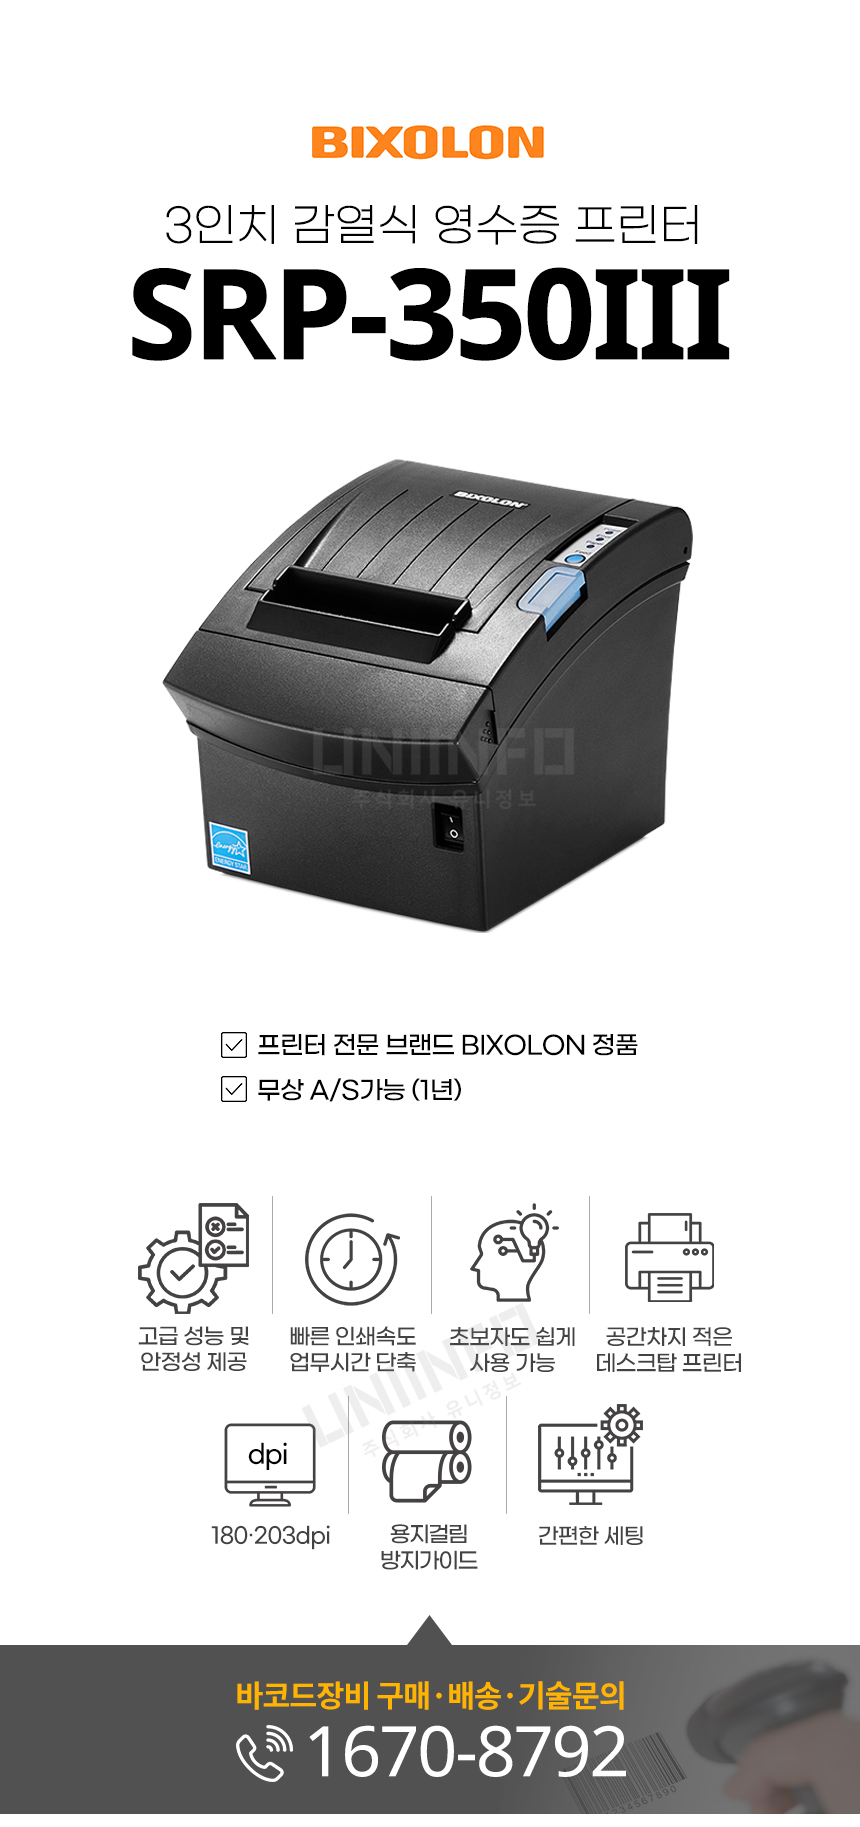 SRP-350III 3인치 감열식 영수증 프린터 고급성능 및 안정성 제공 빠른 인쇄속도 업무시간 단축 용지걸림 방지가이드